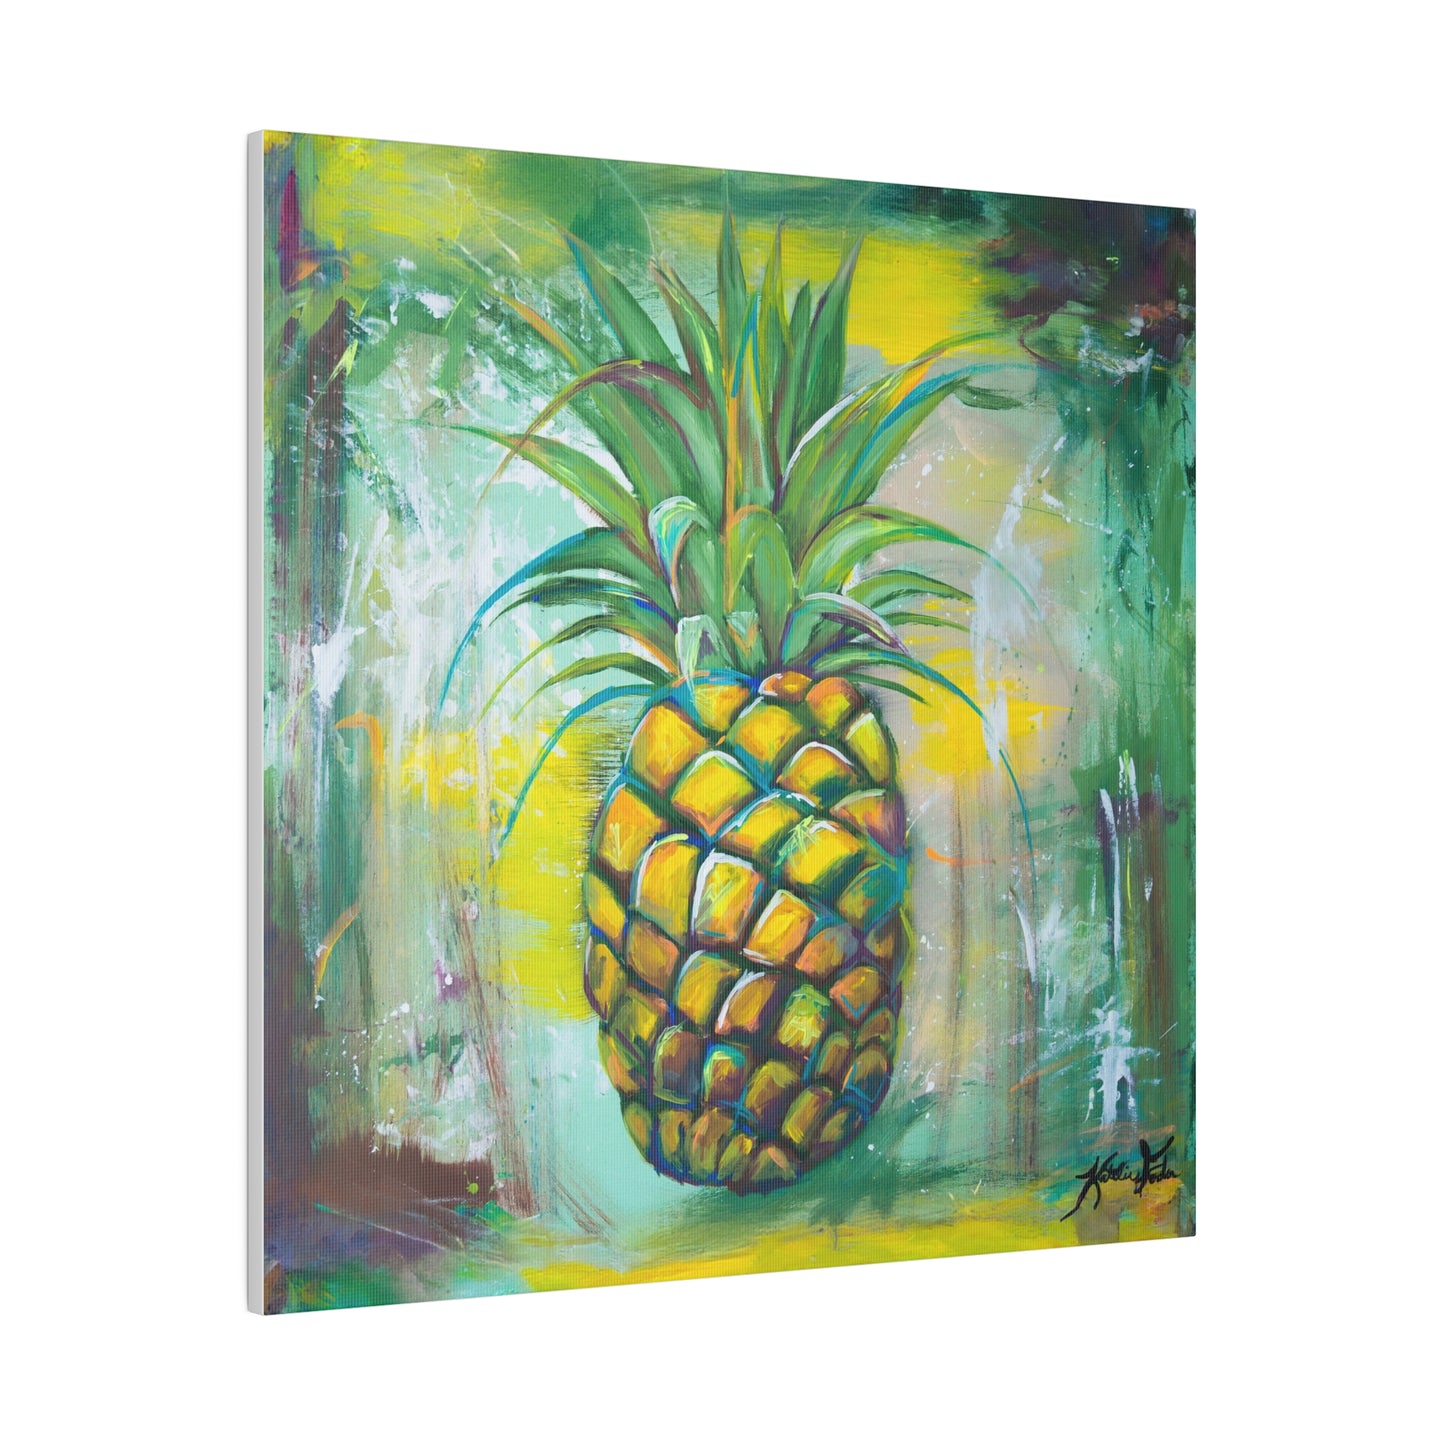 Pineapple Acrylic on canvas